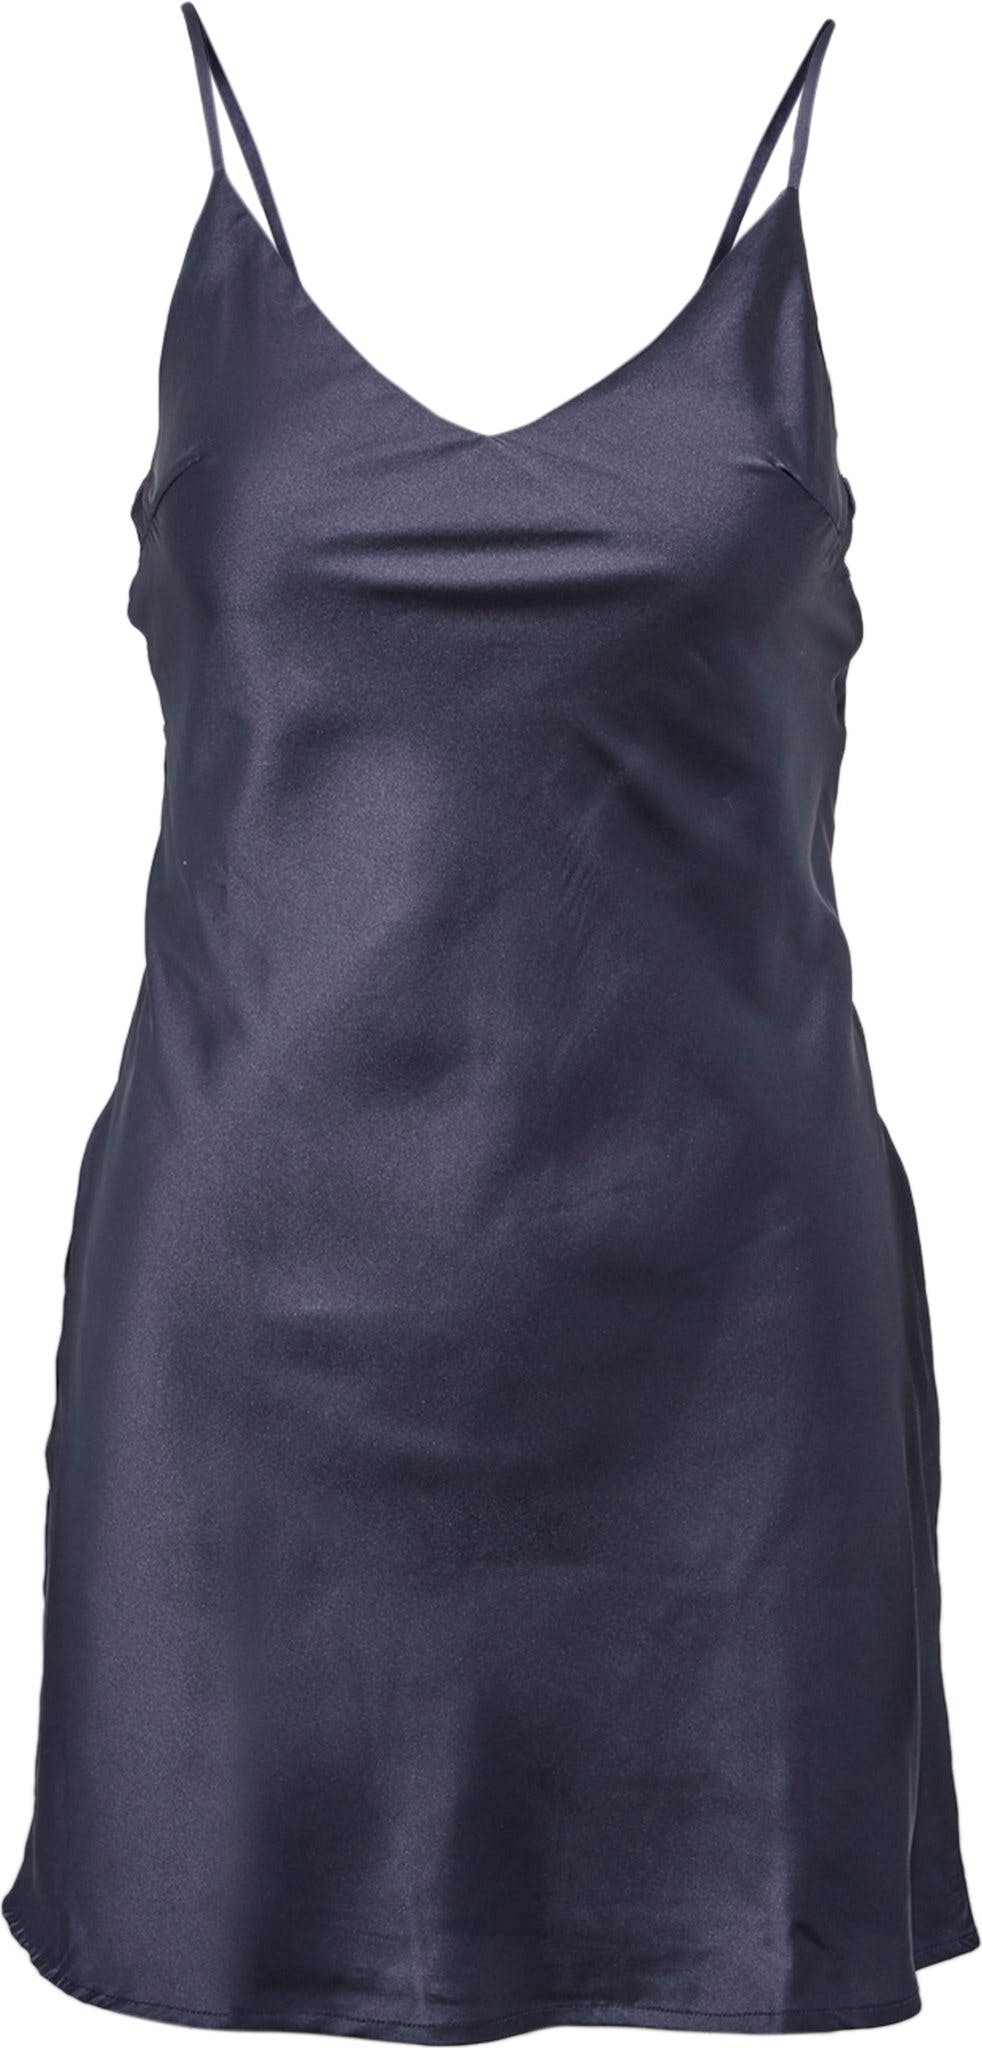 Product image for Short Satin Dress - Women's